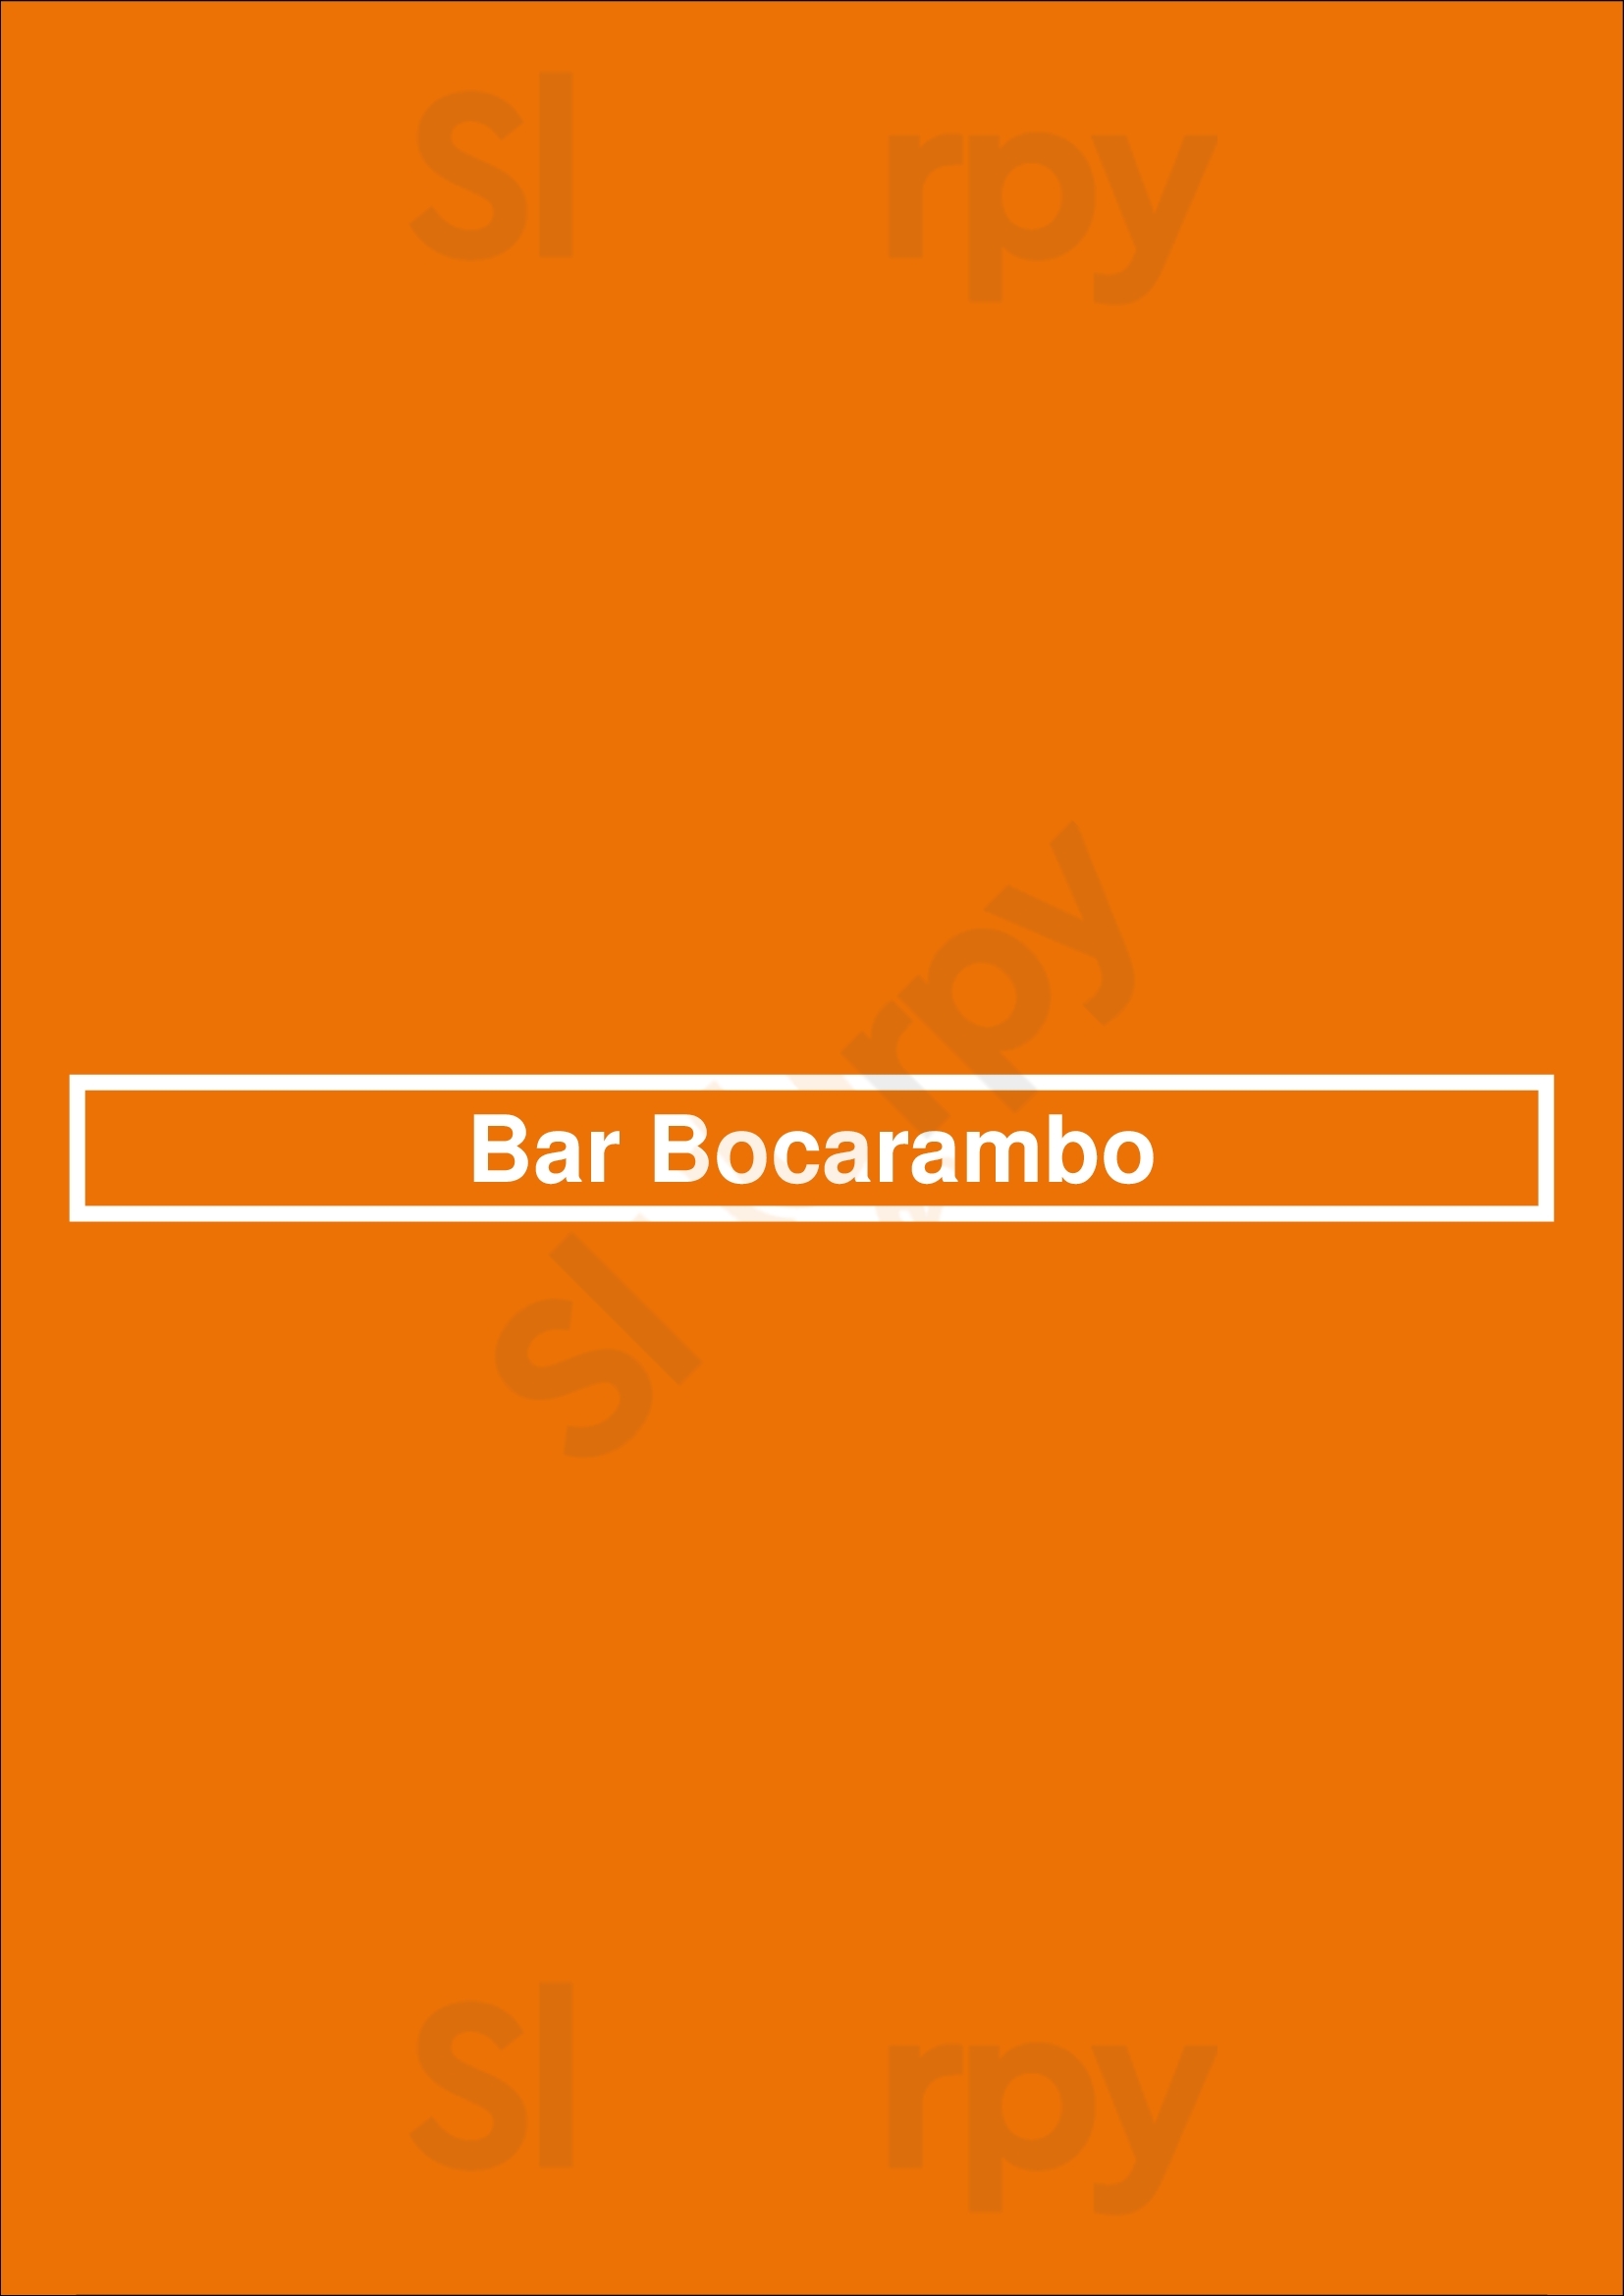 Bar Bocarambo Jerez de la Frontera Menu - 1